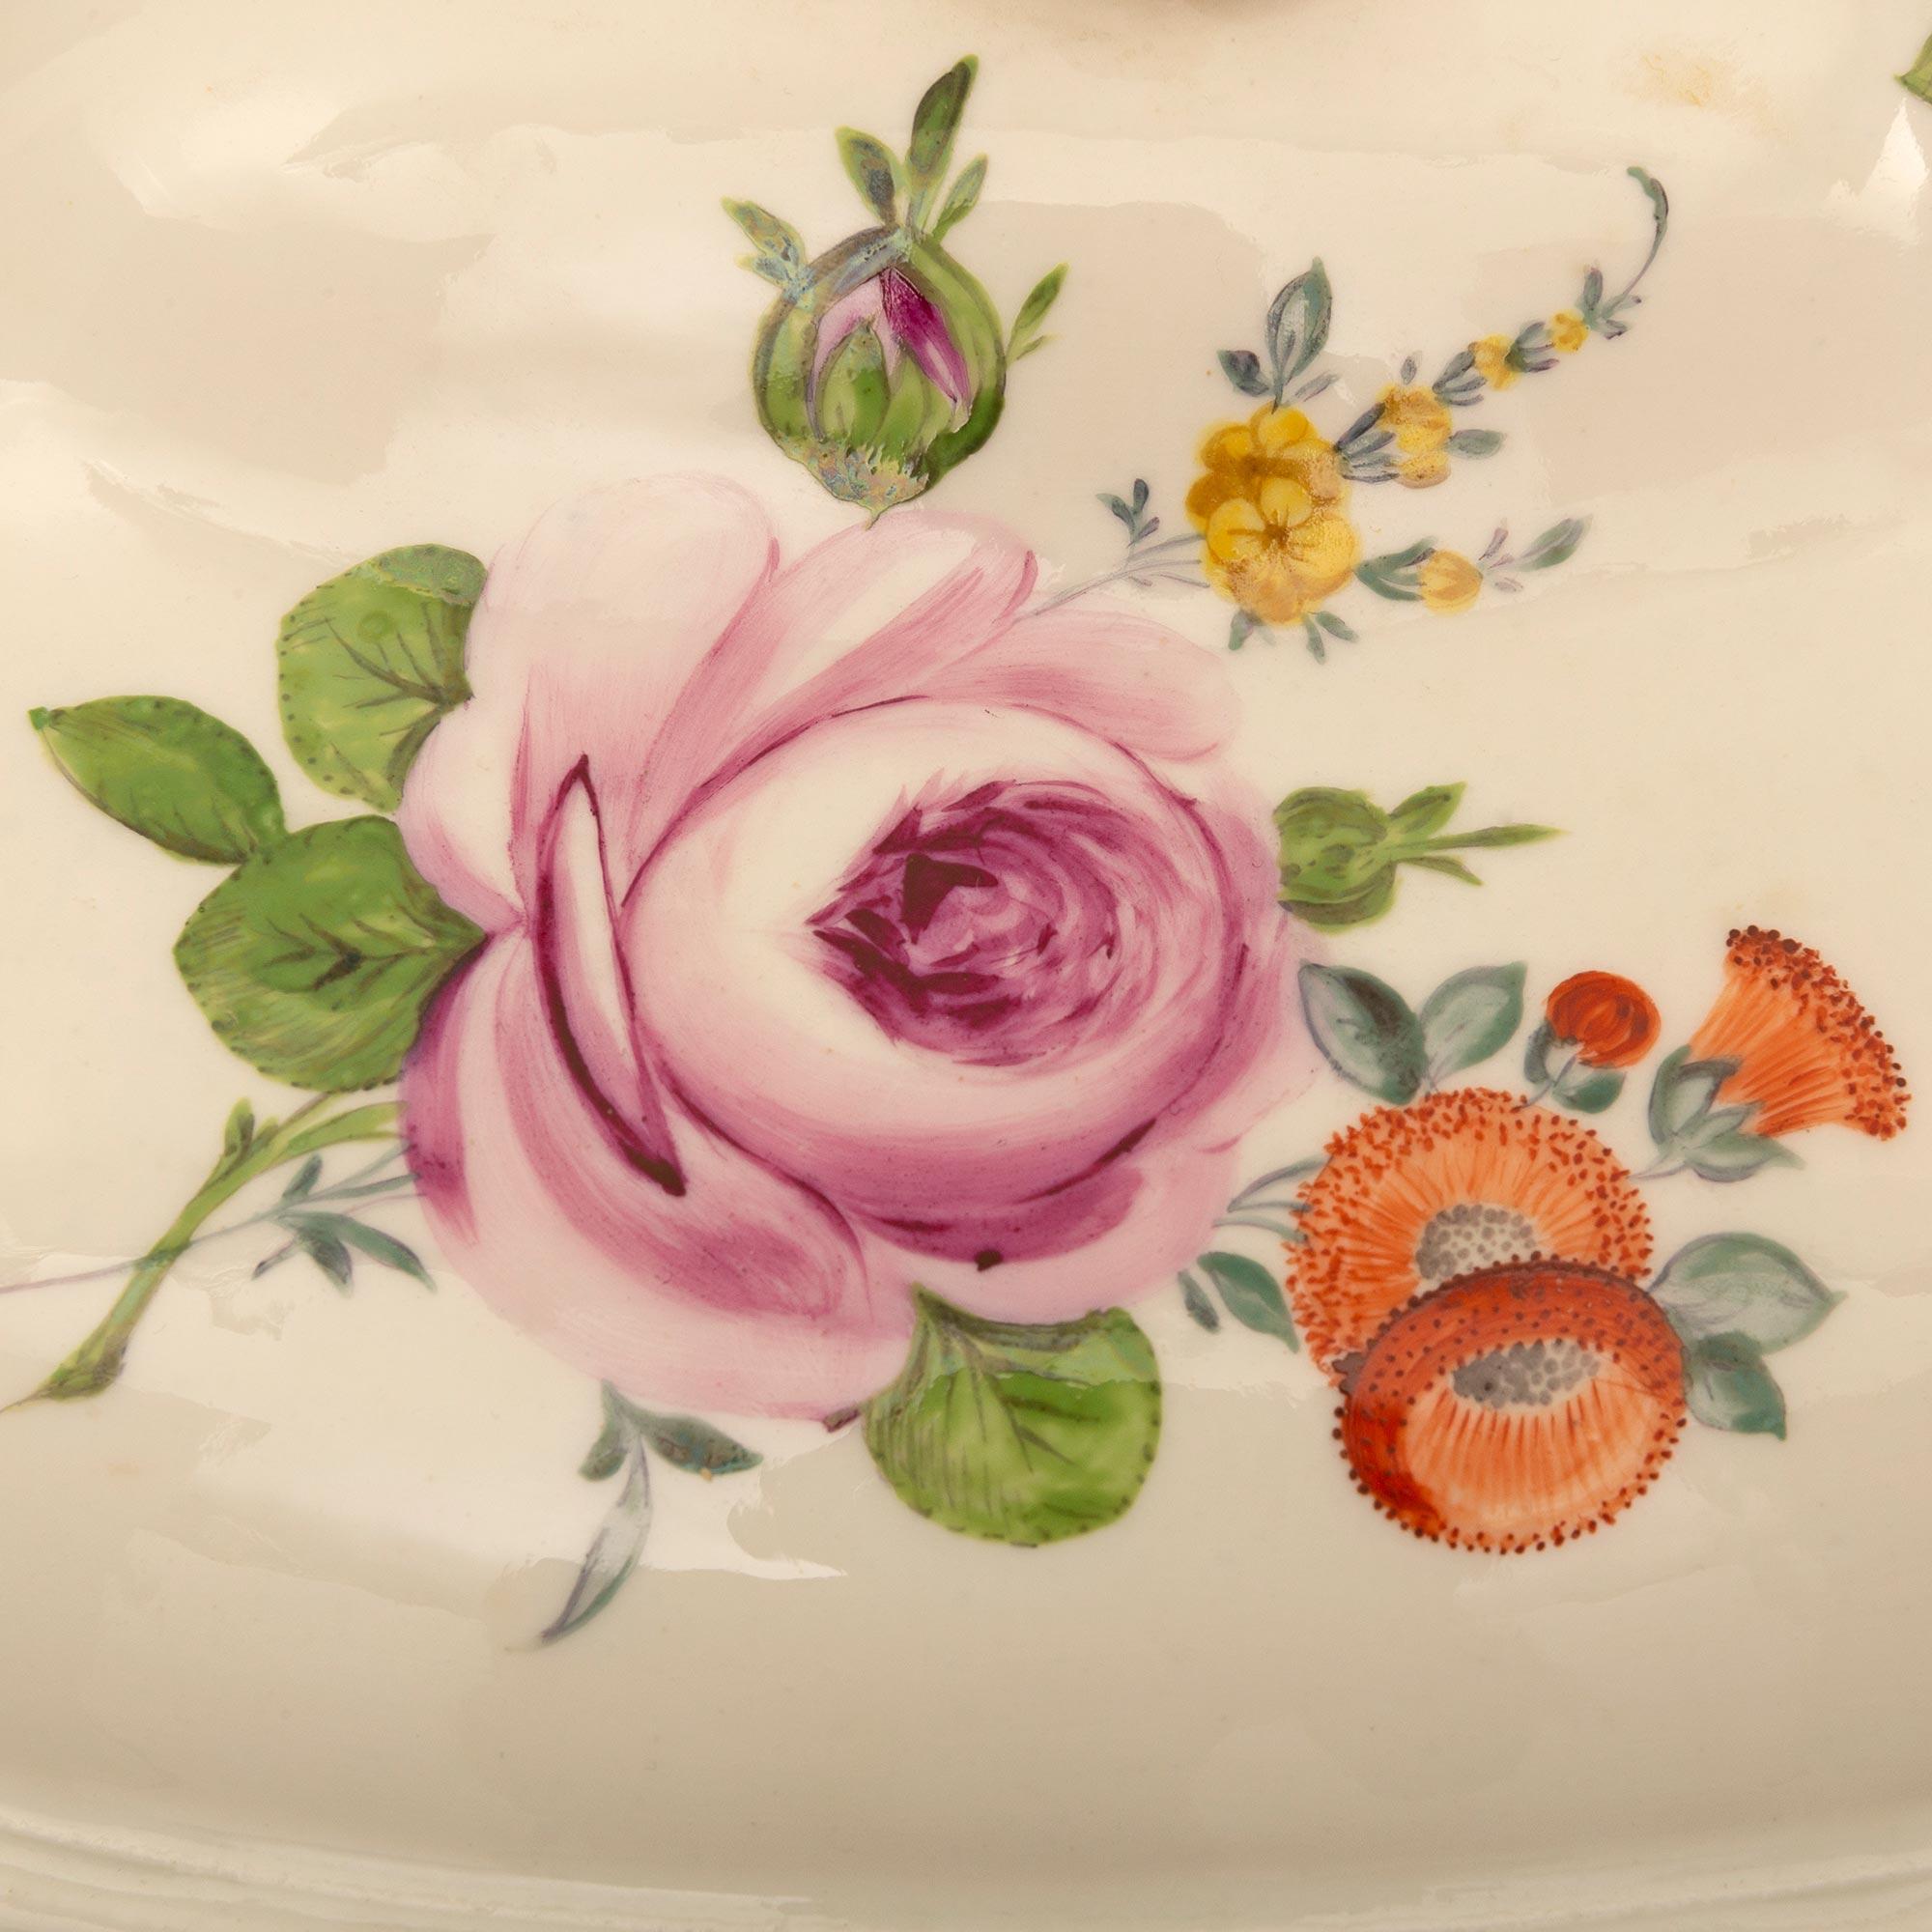 German 19th Century Meissen Porcelain Lidded Tureen For Sale 2